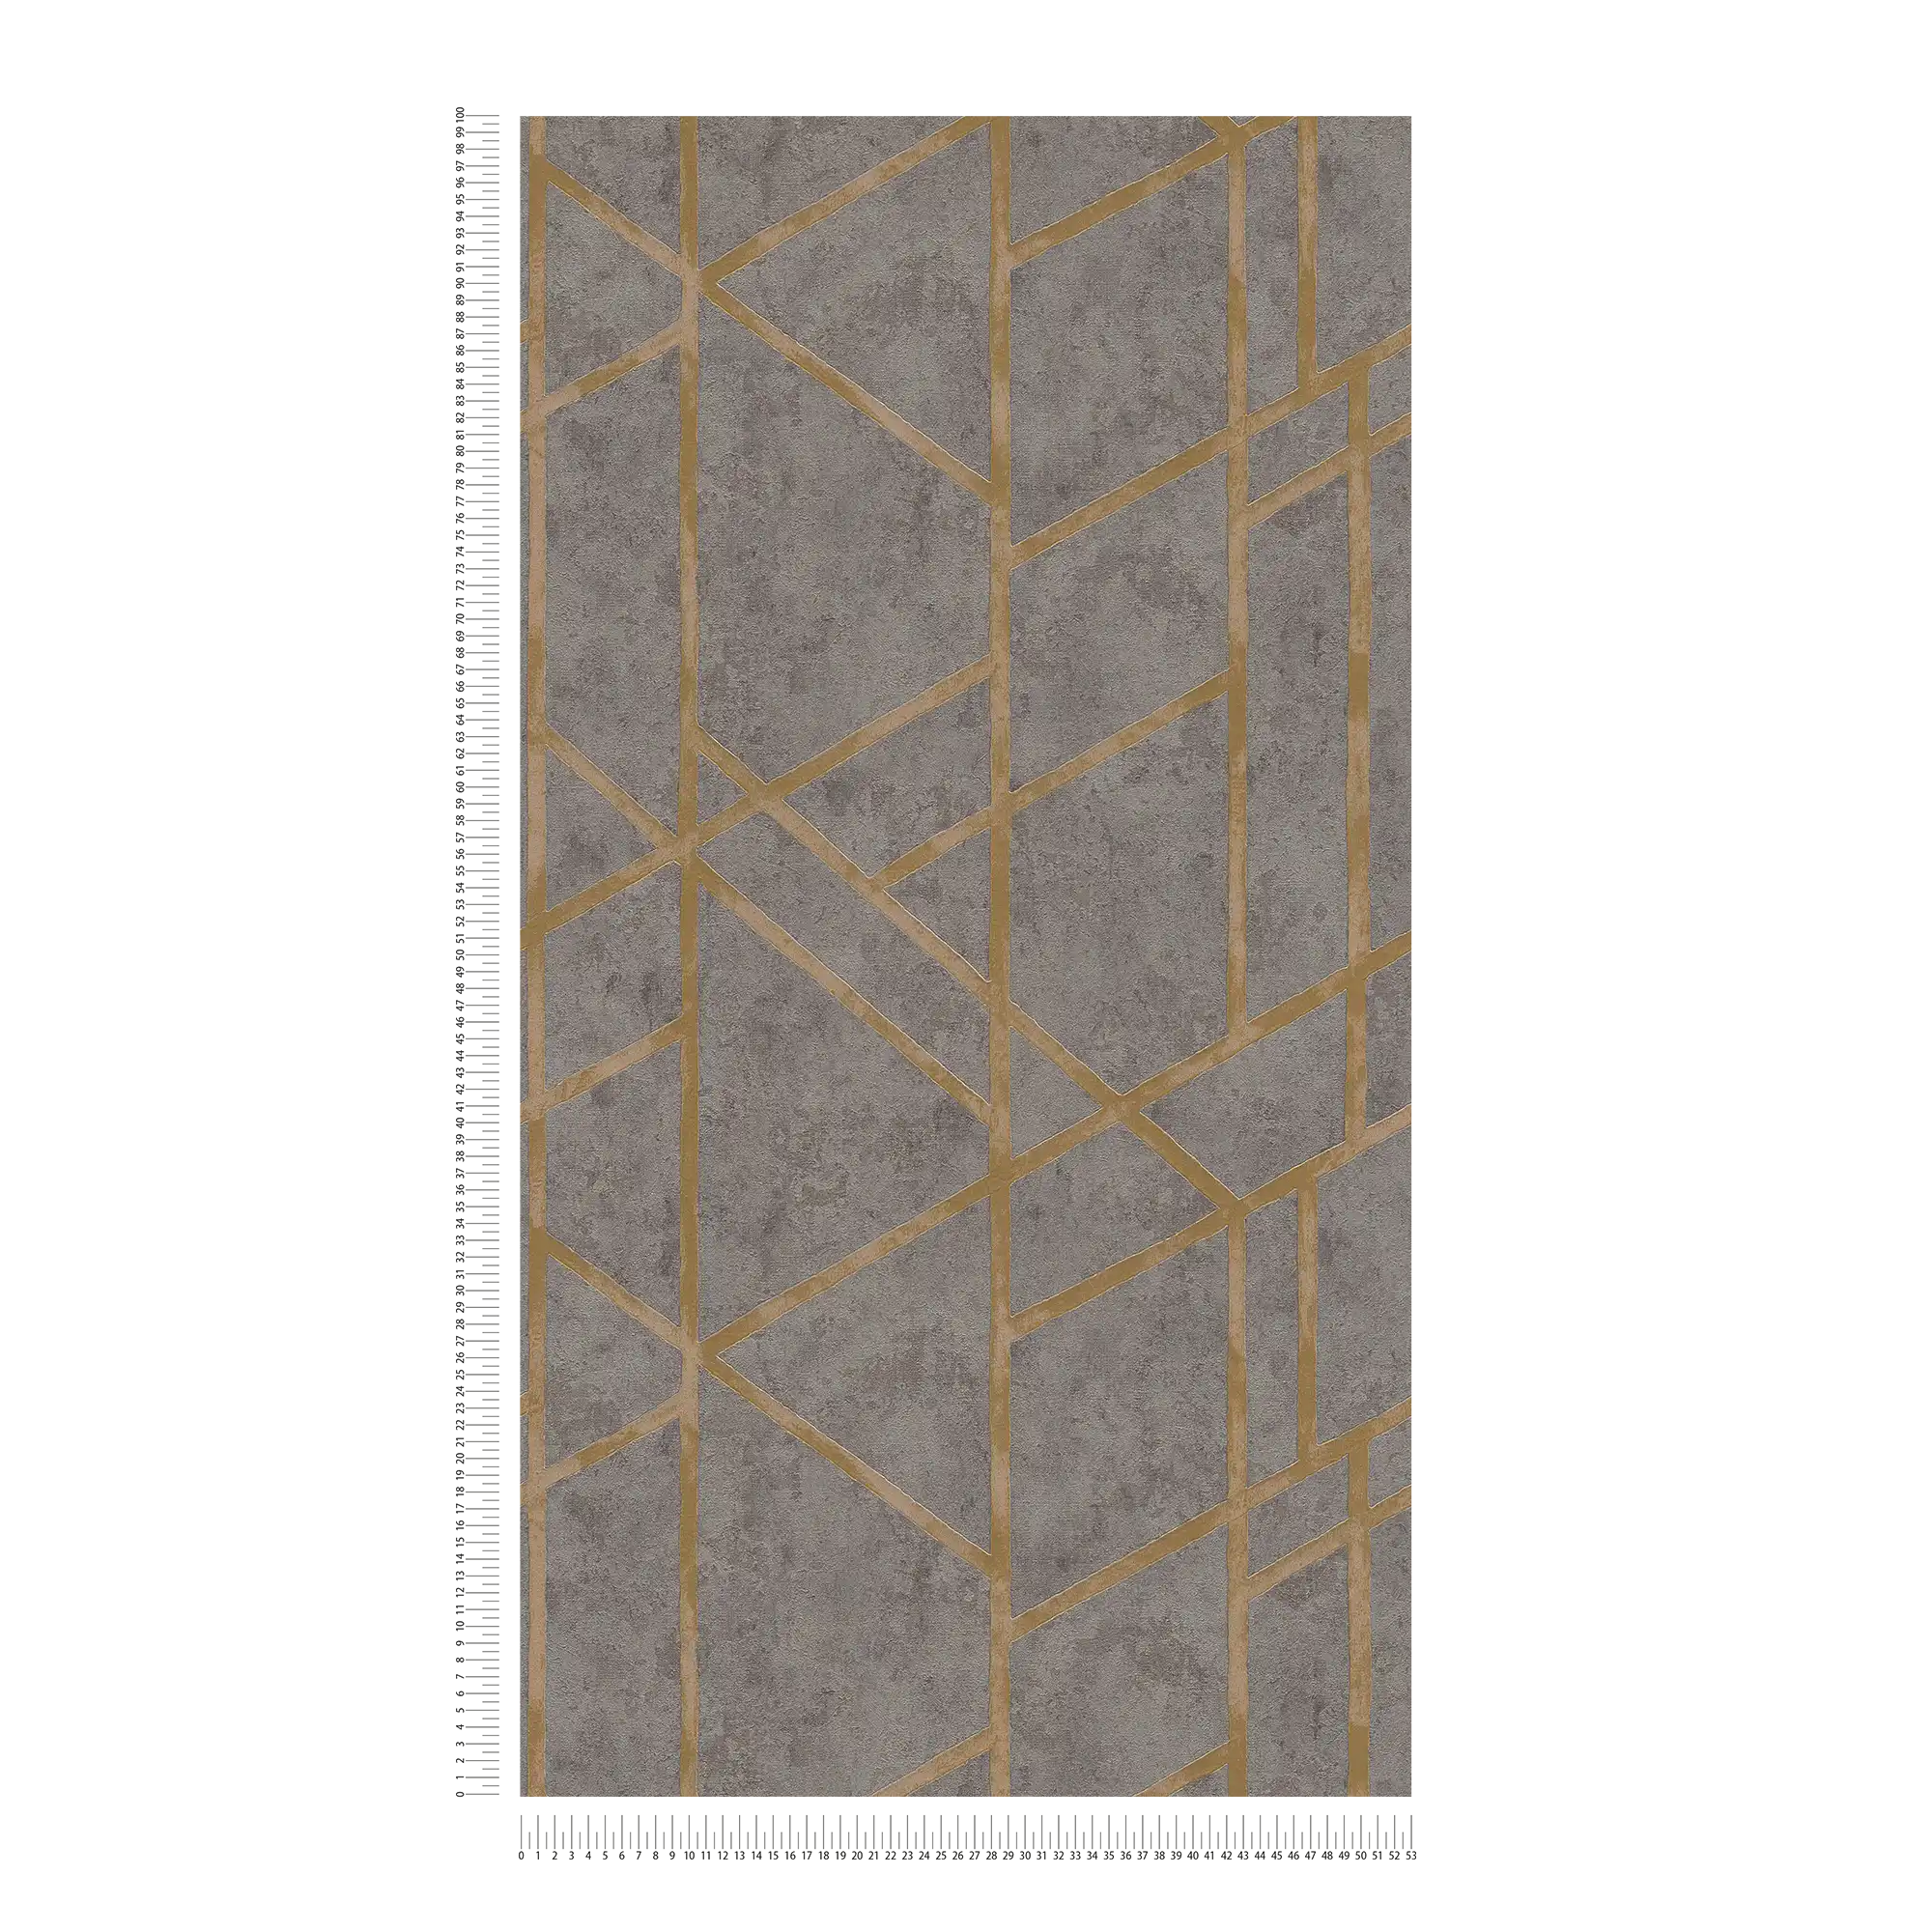             Betontapete mit goldenem Linien-Muster – Grau, Gold
        